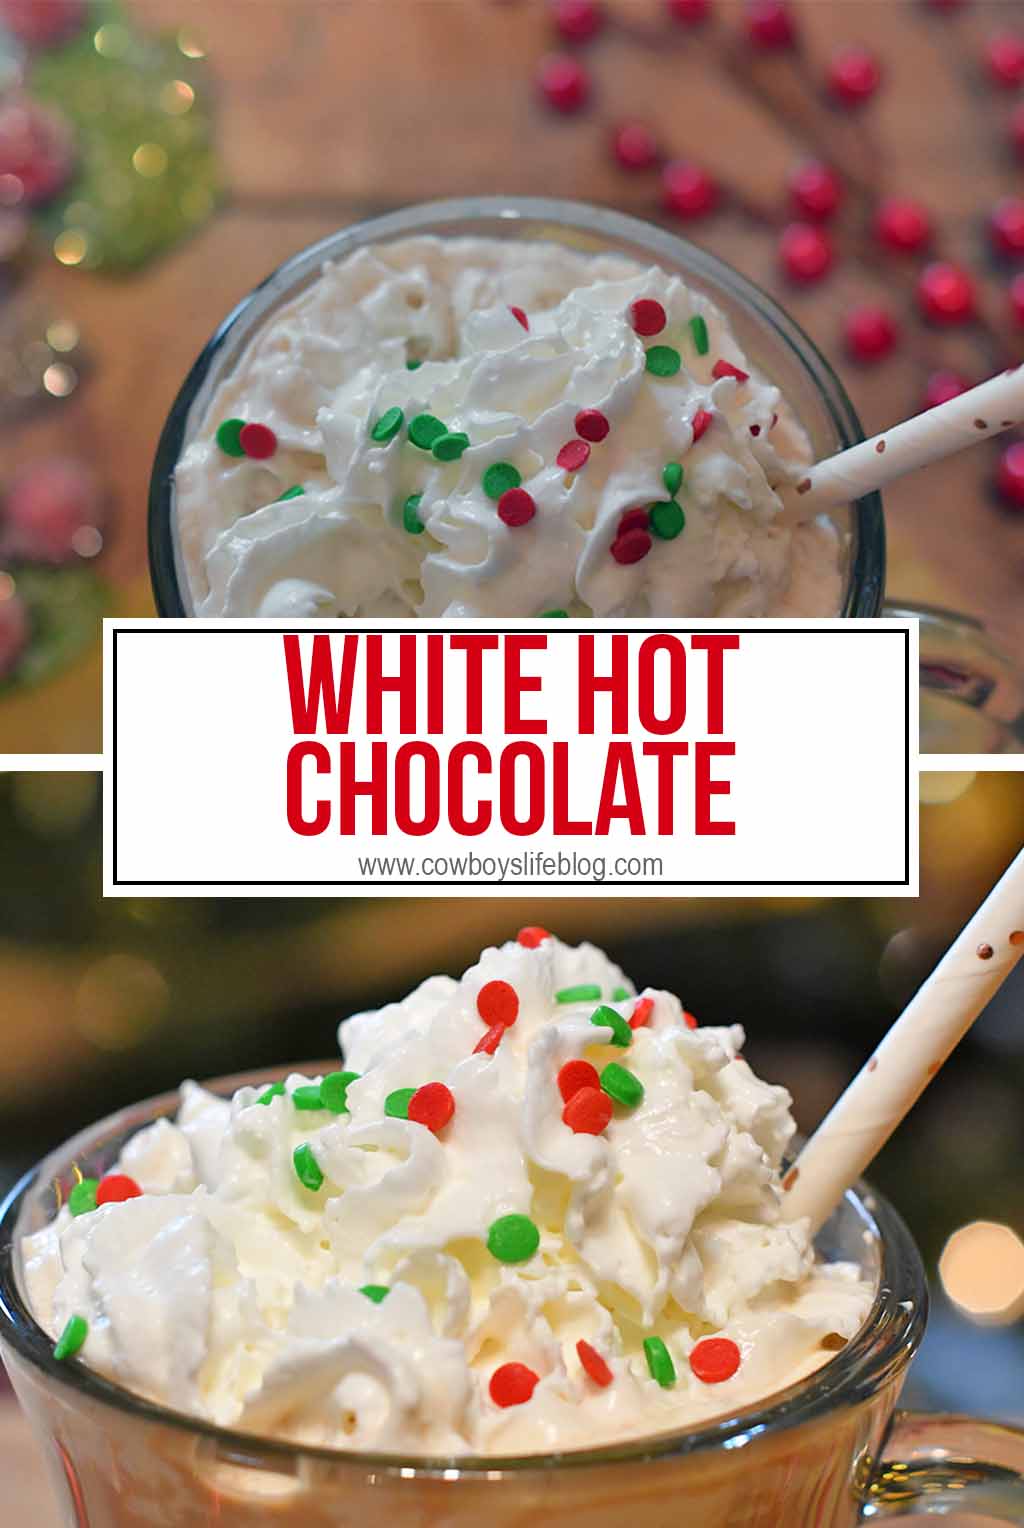 How to Make White Hot Chocolate